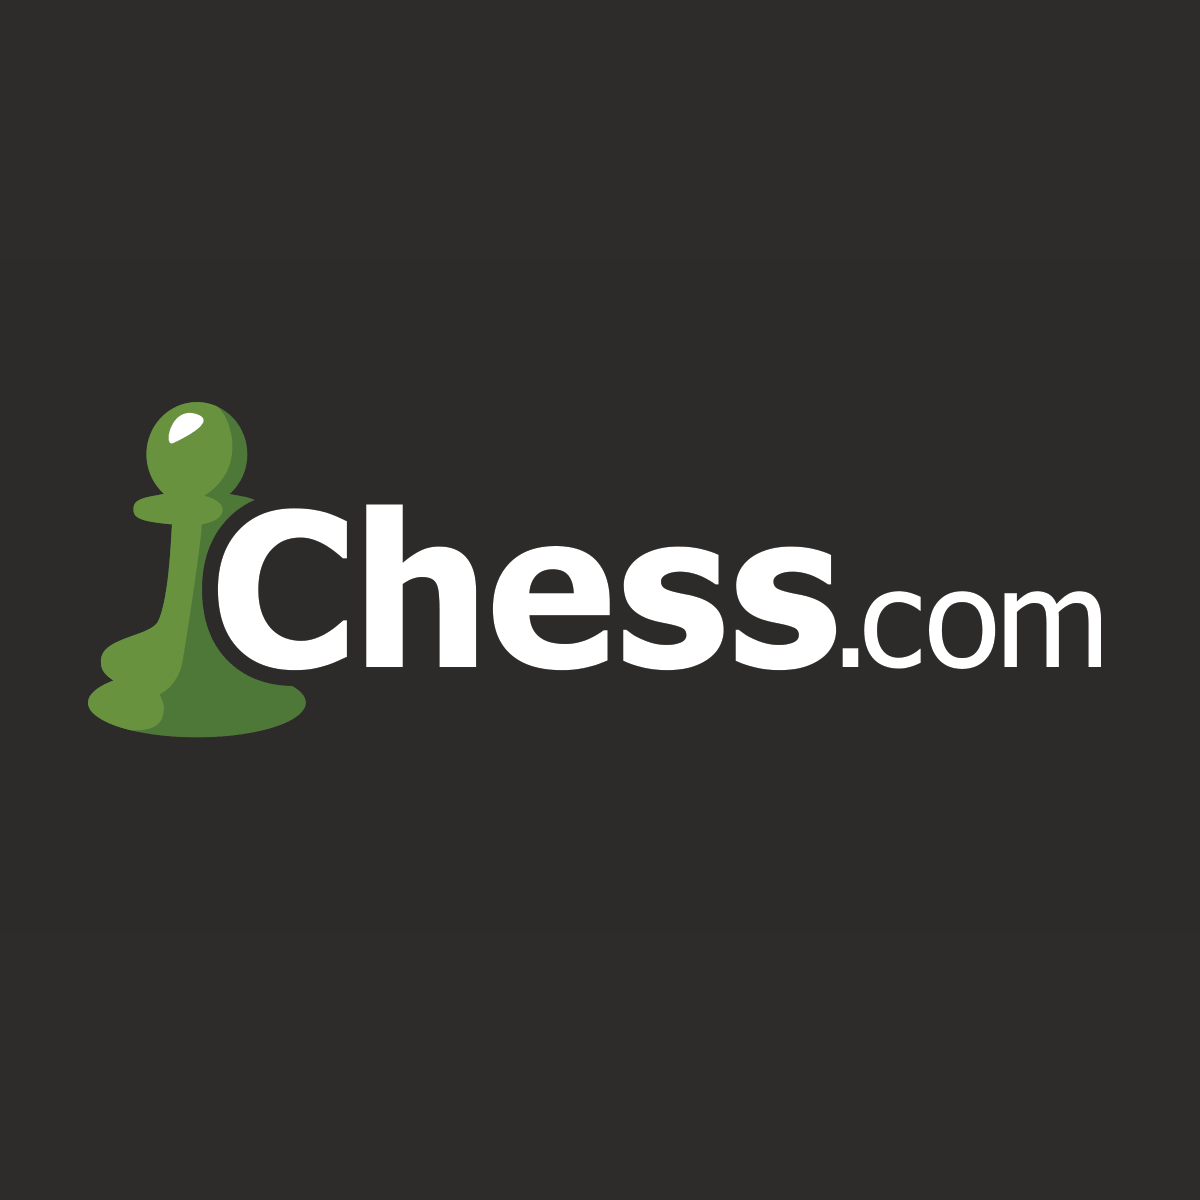 Playtcoin com. Chess.com. Значок Chess.com. Логотип ческом.